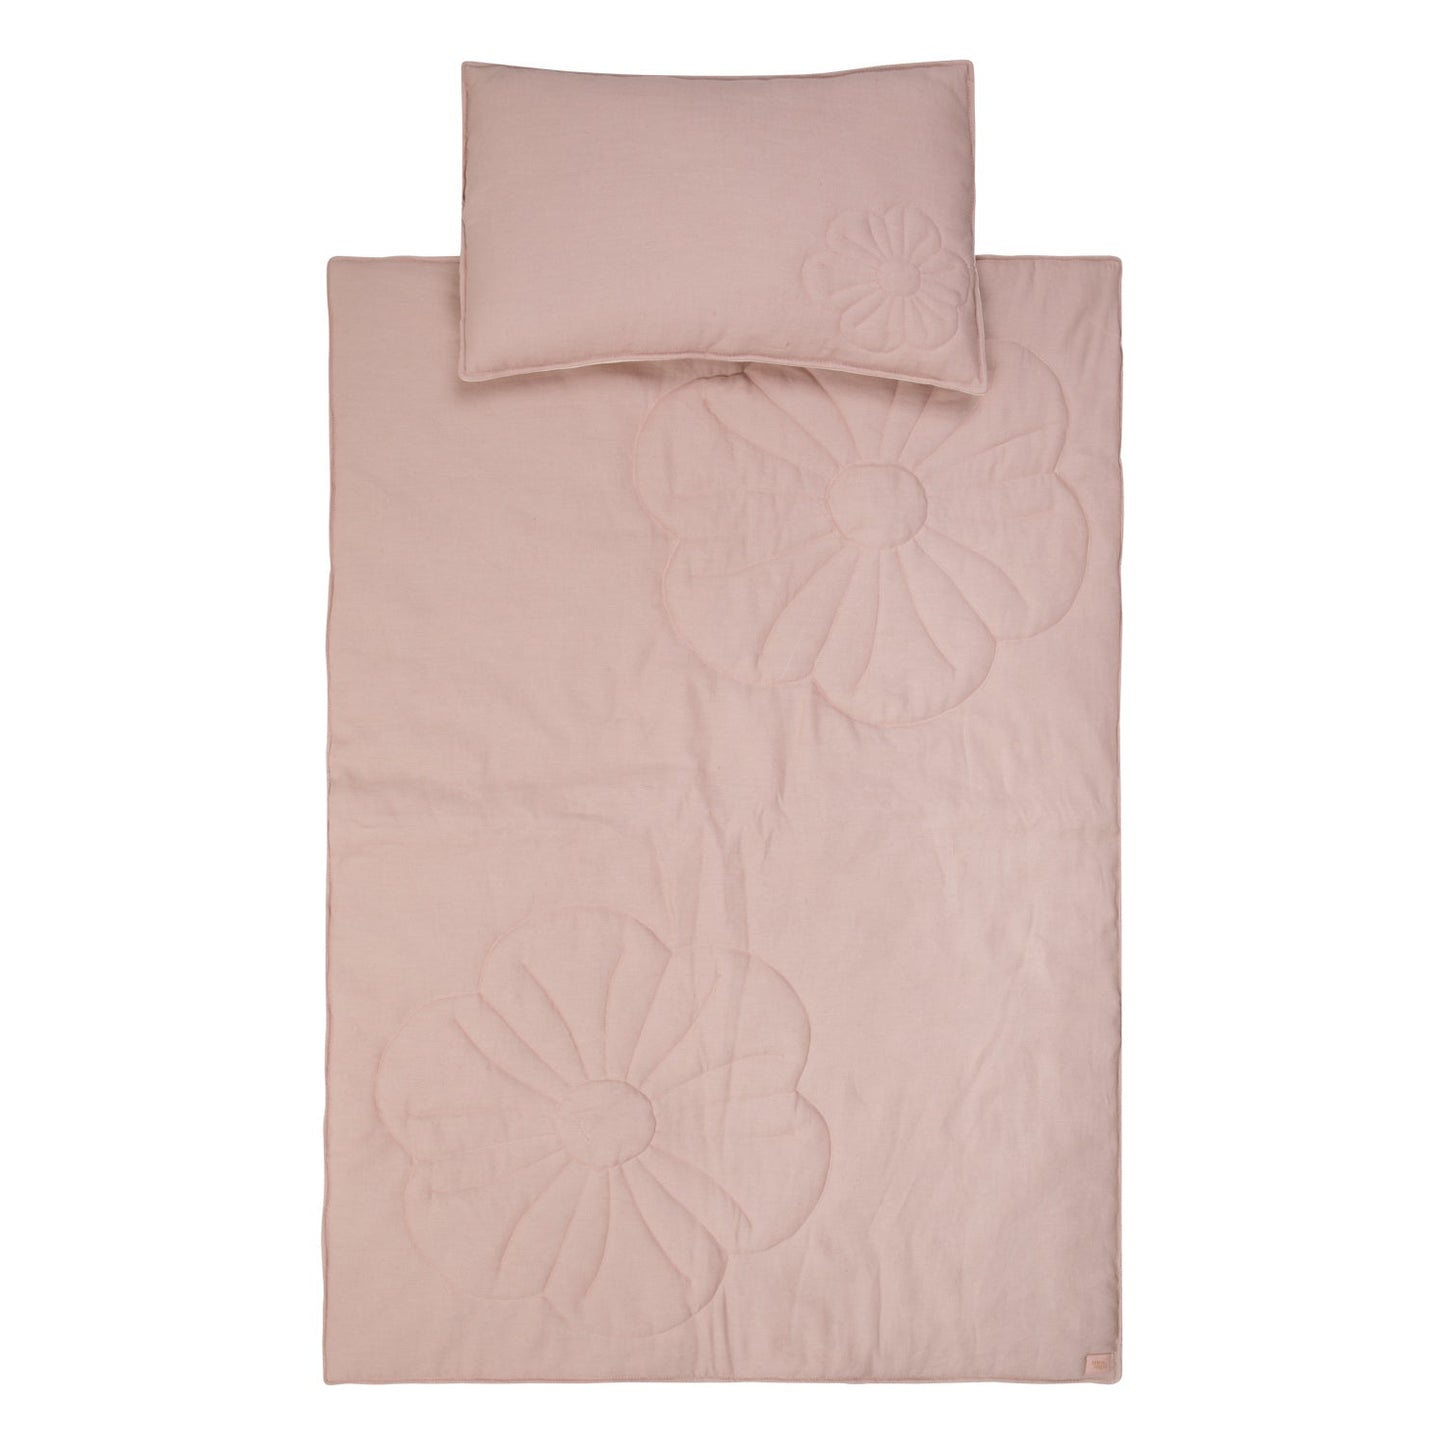 Linen "Powder Pink" Flower Child Cover Set (Large)